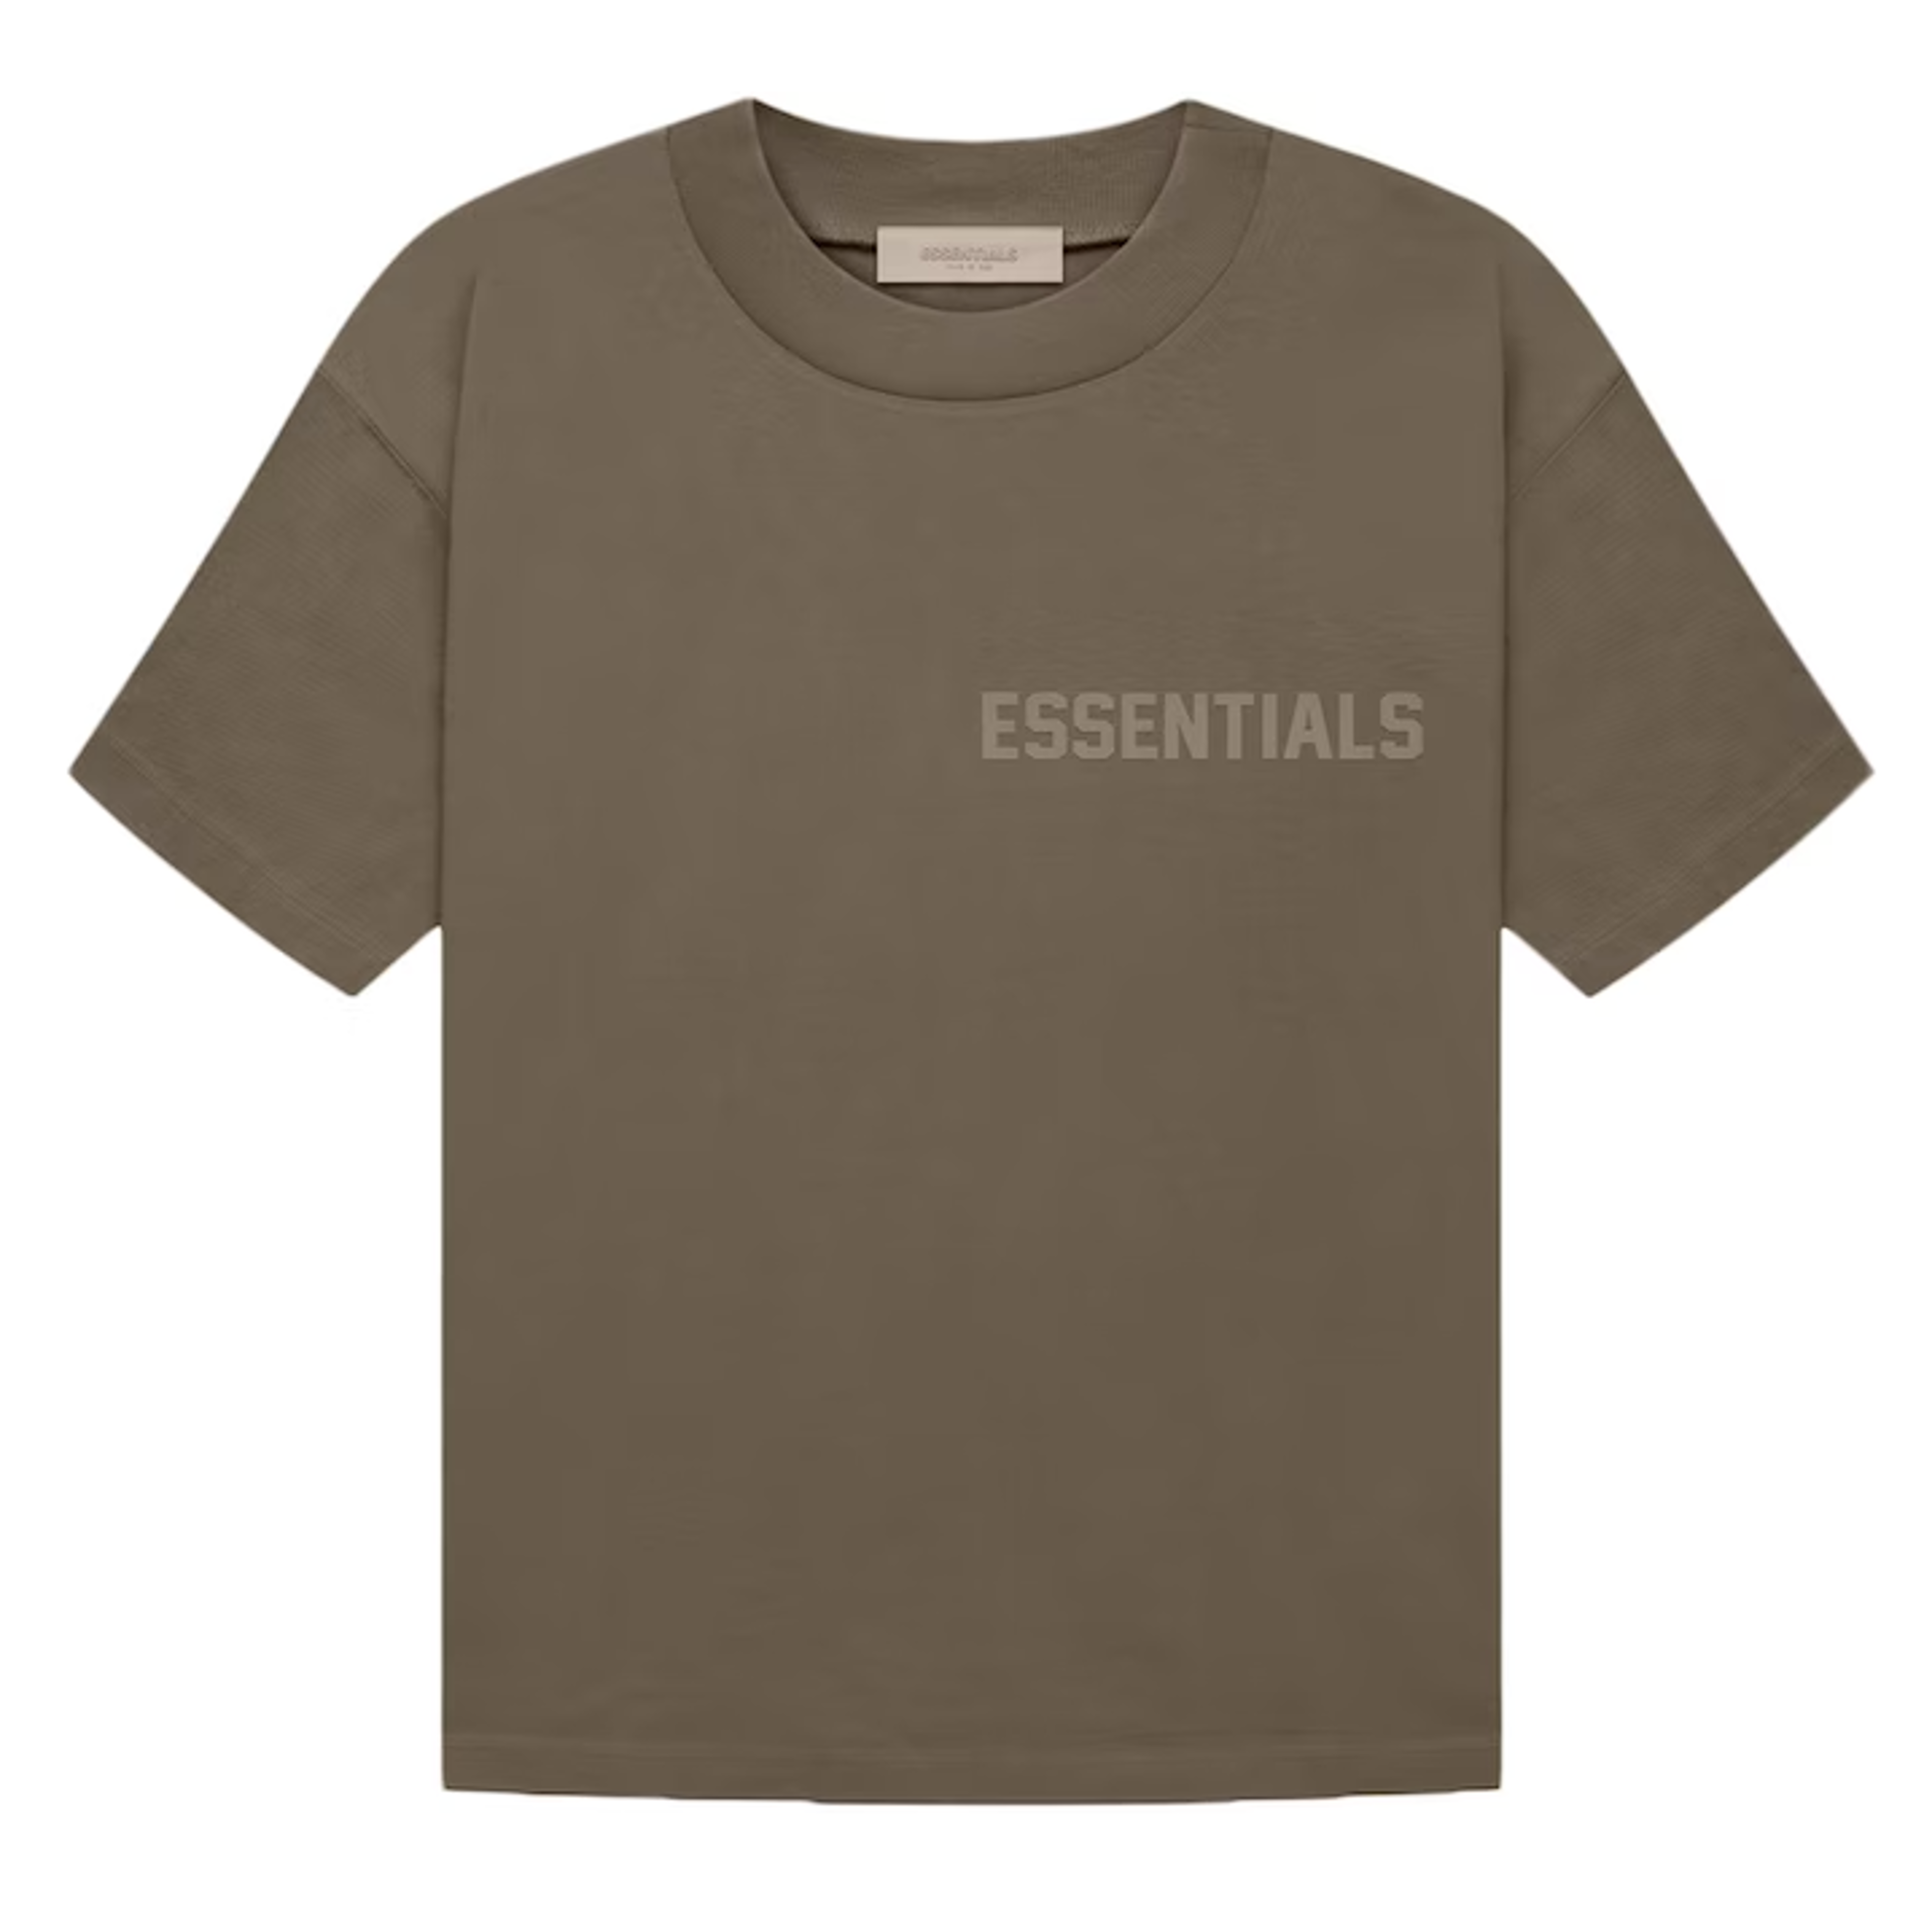 Fear of God Essentials Short Sleeve Tee Shirt Wood